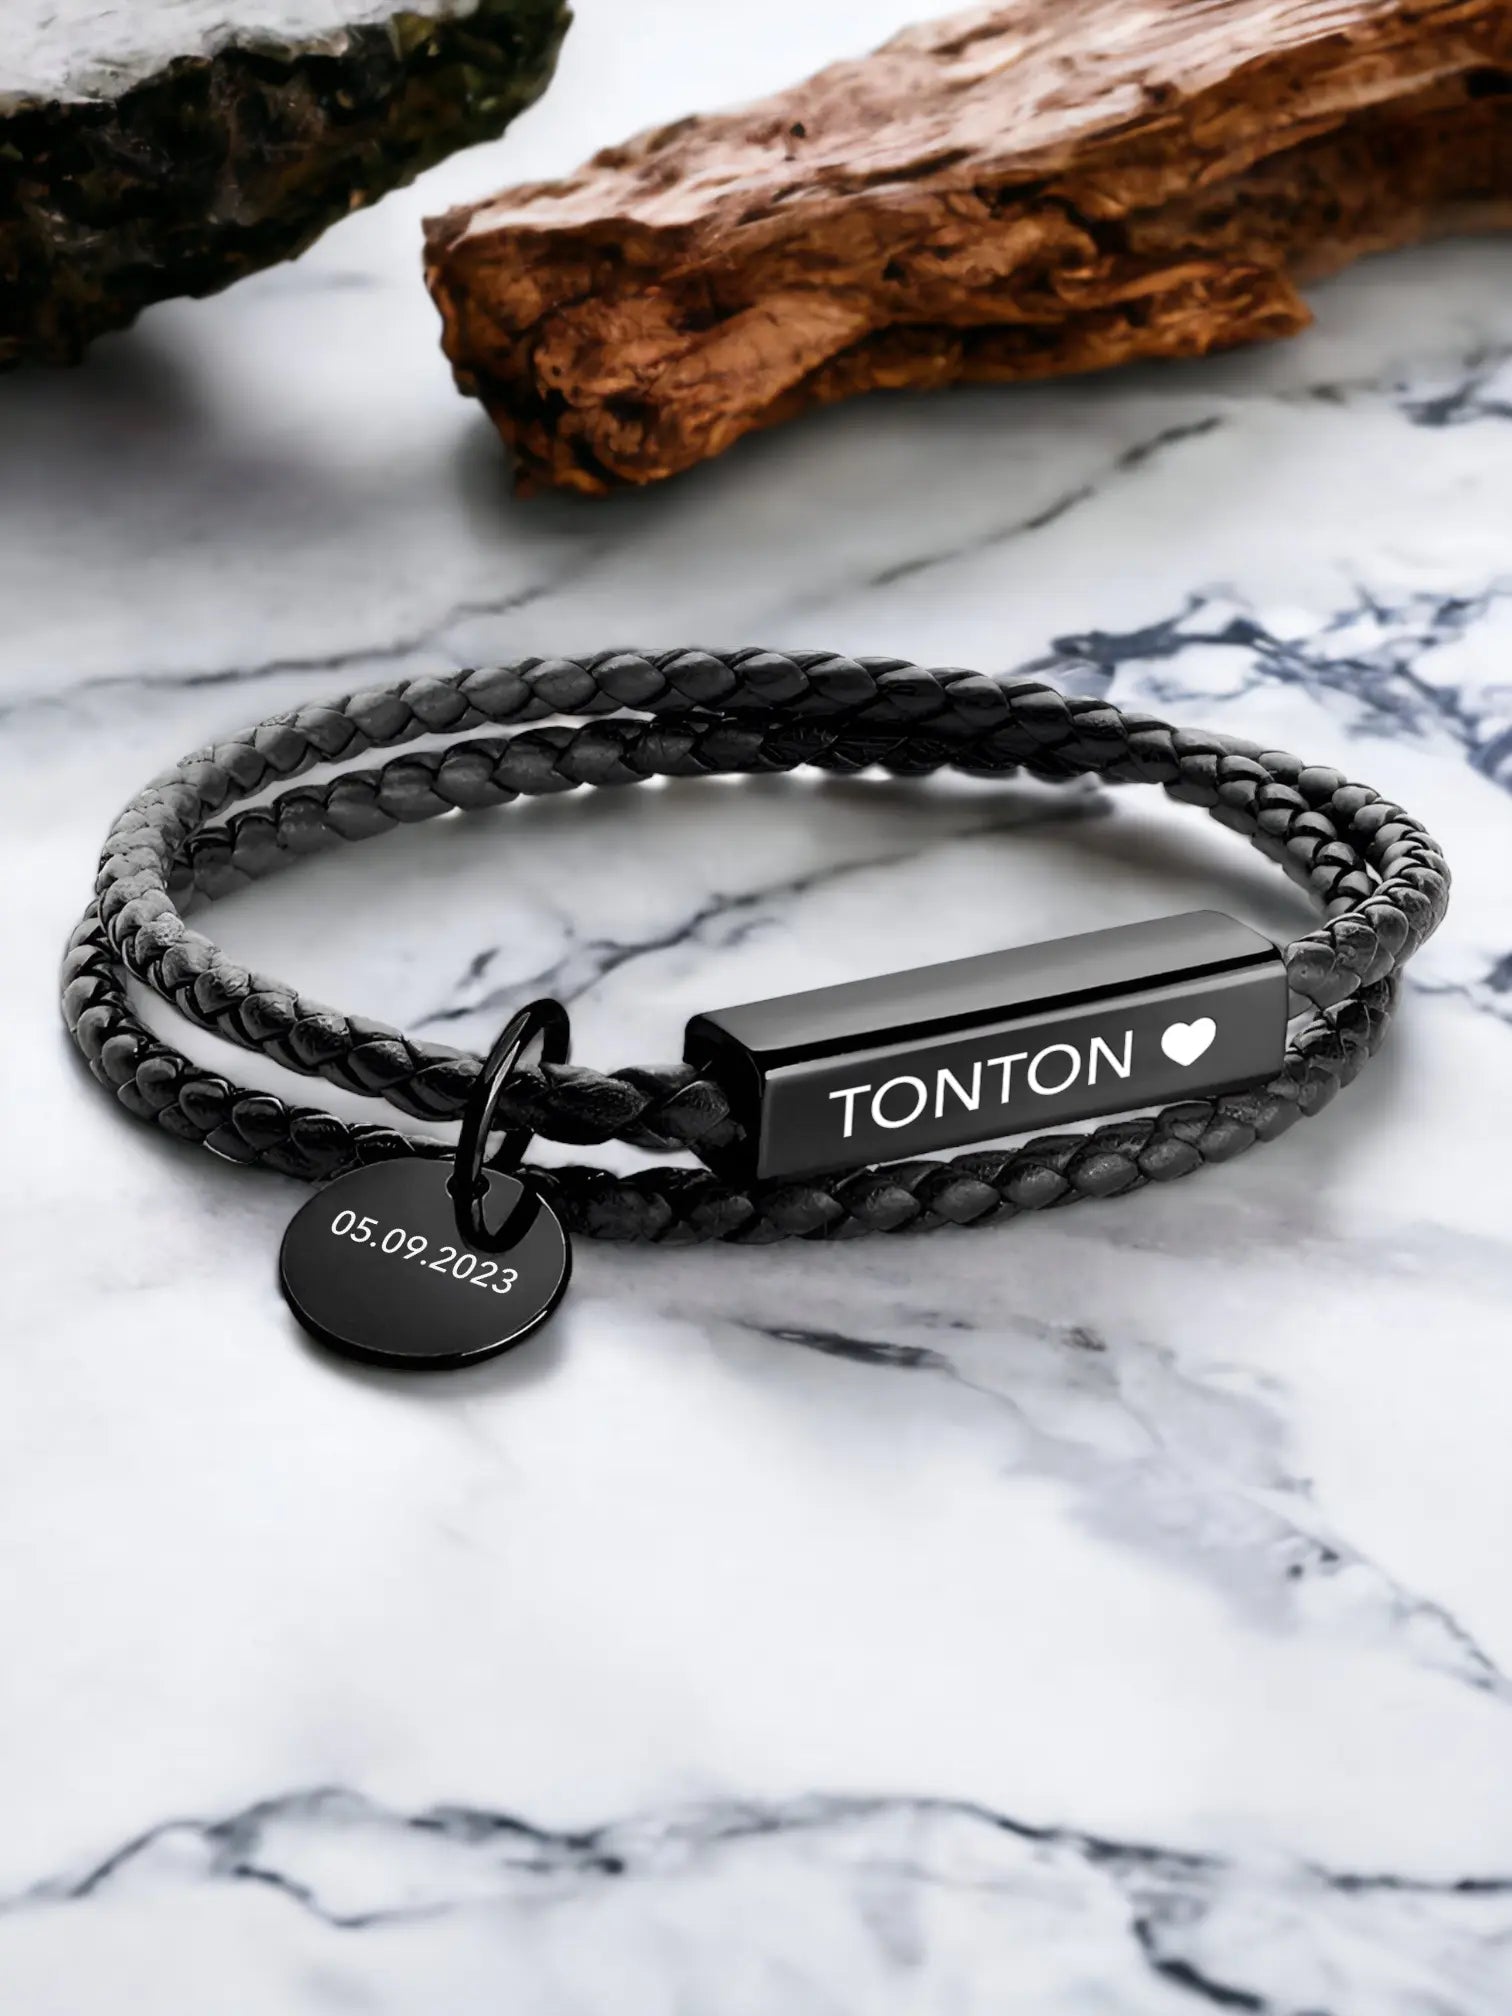 Tonton leather bracelet